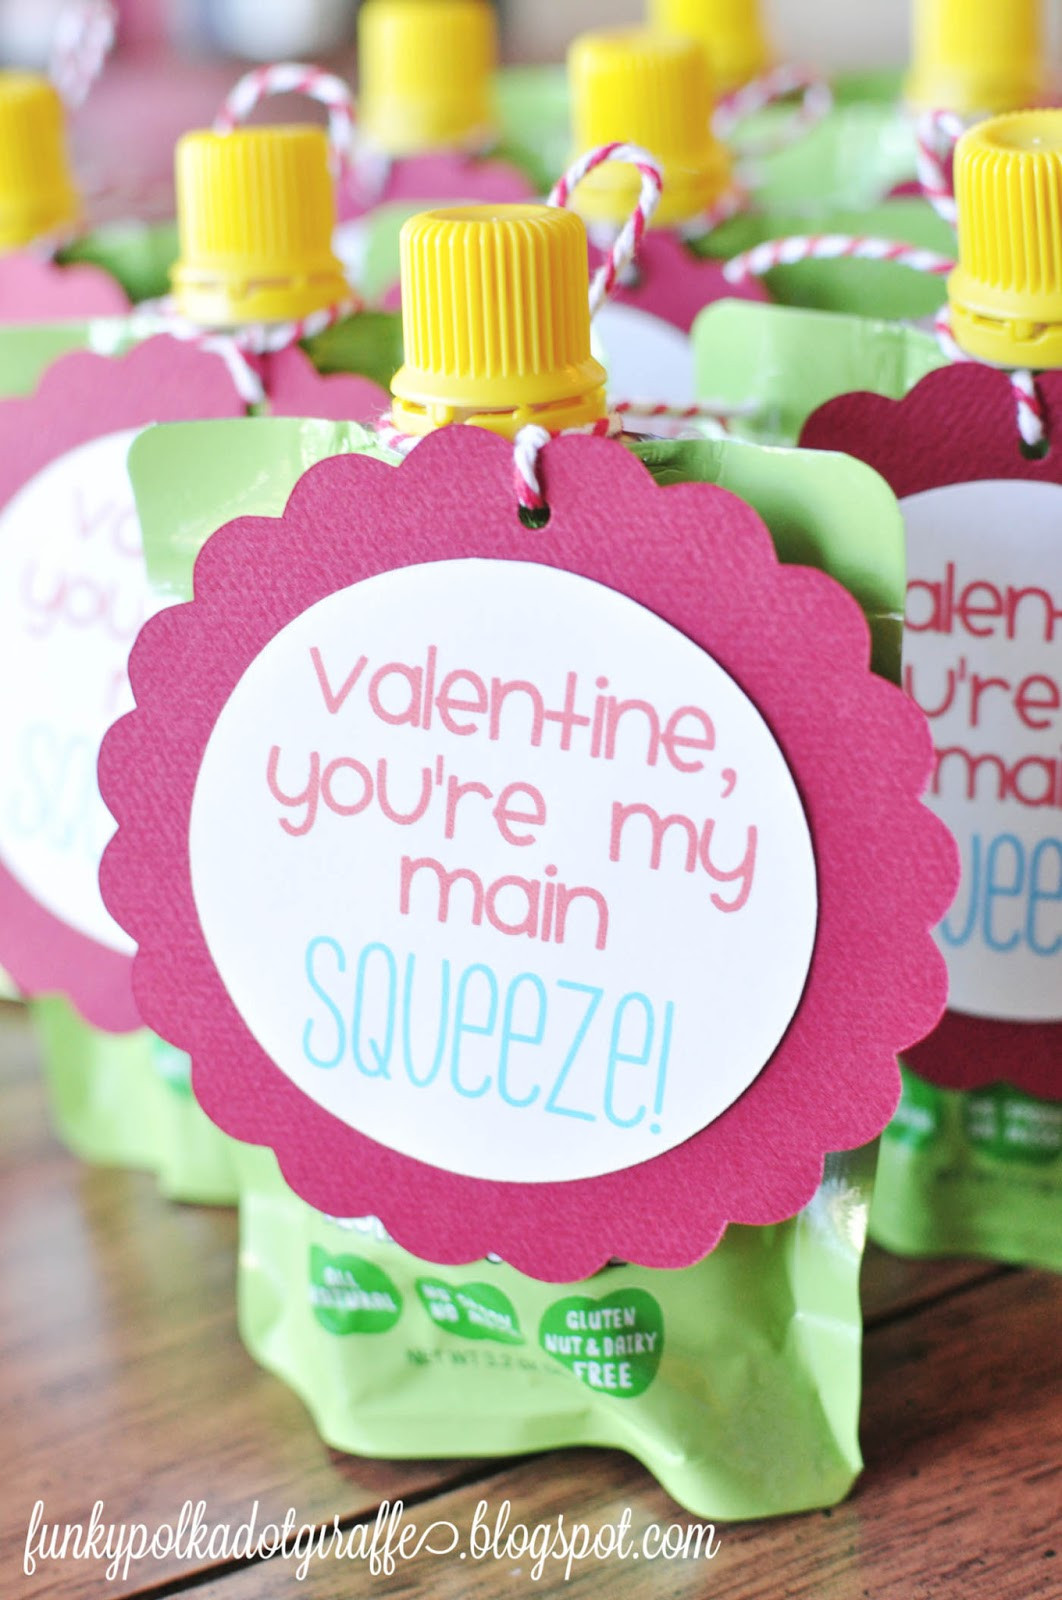 Valentines Gift Ideas For Children
 Funky Polkadot Giraffe Preschool Valentines You re My